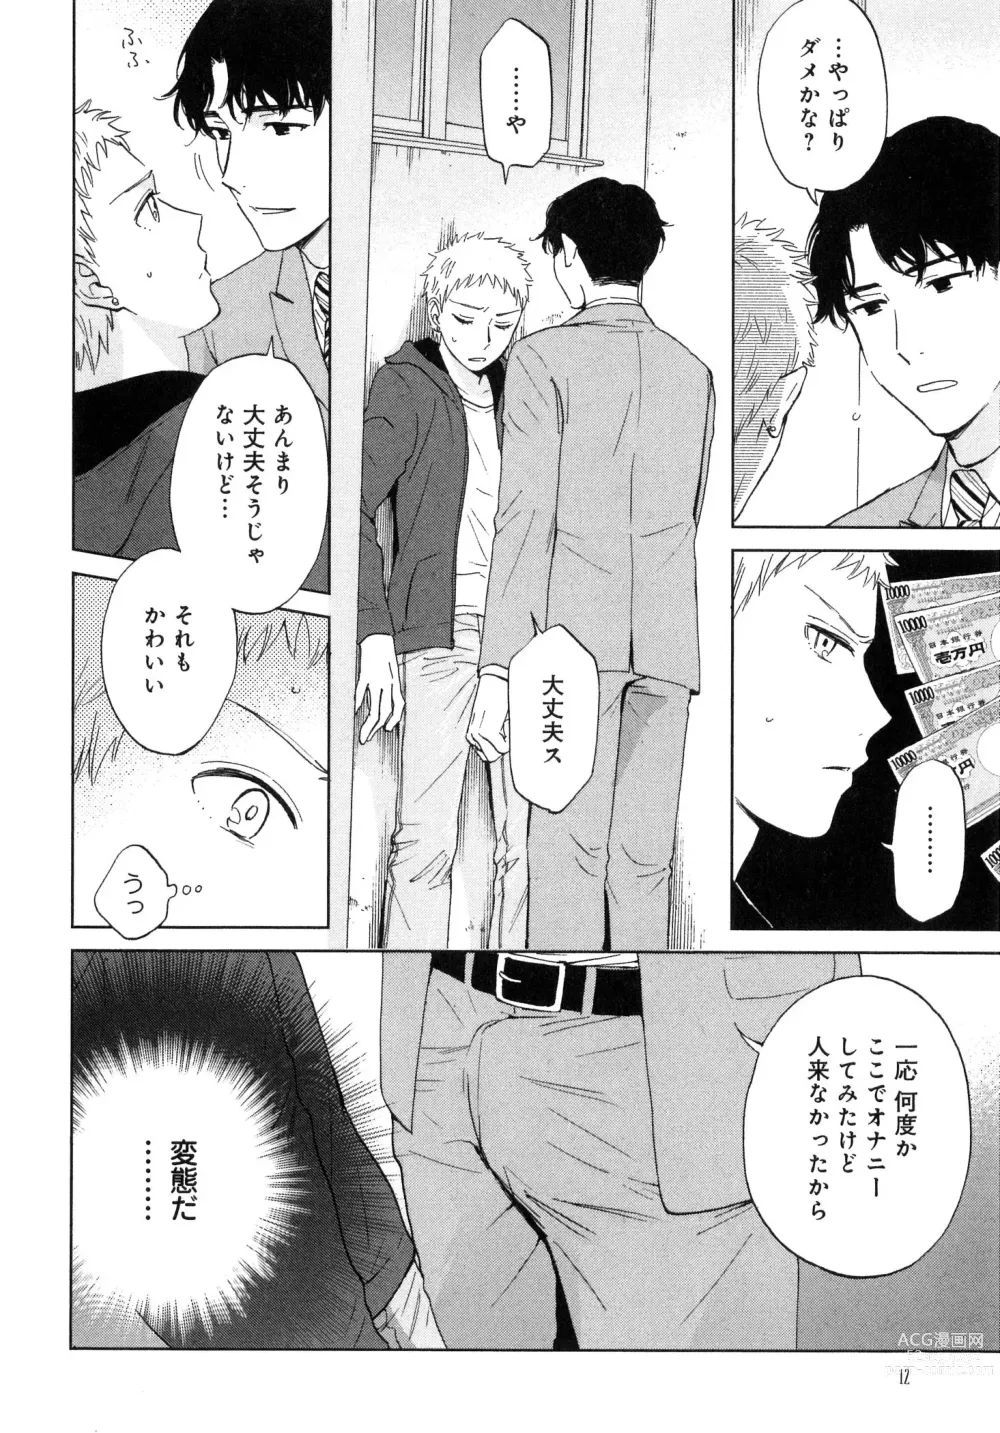 Page 14 of manga Outside Pornograph